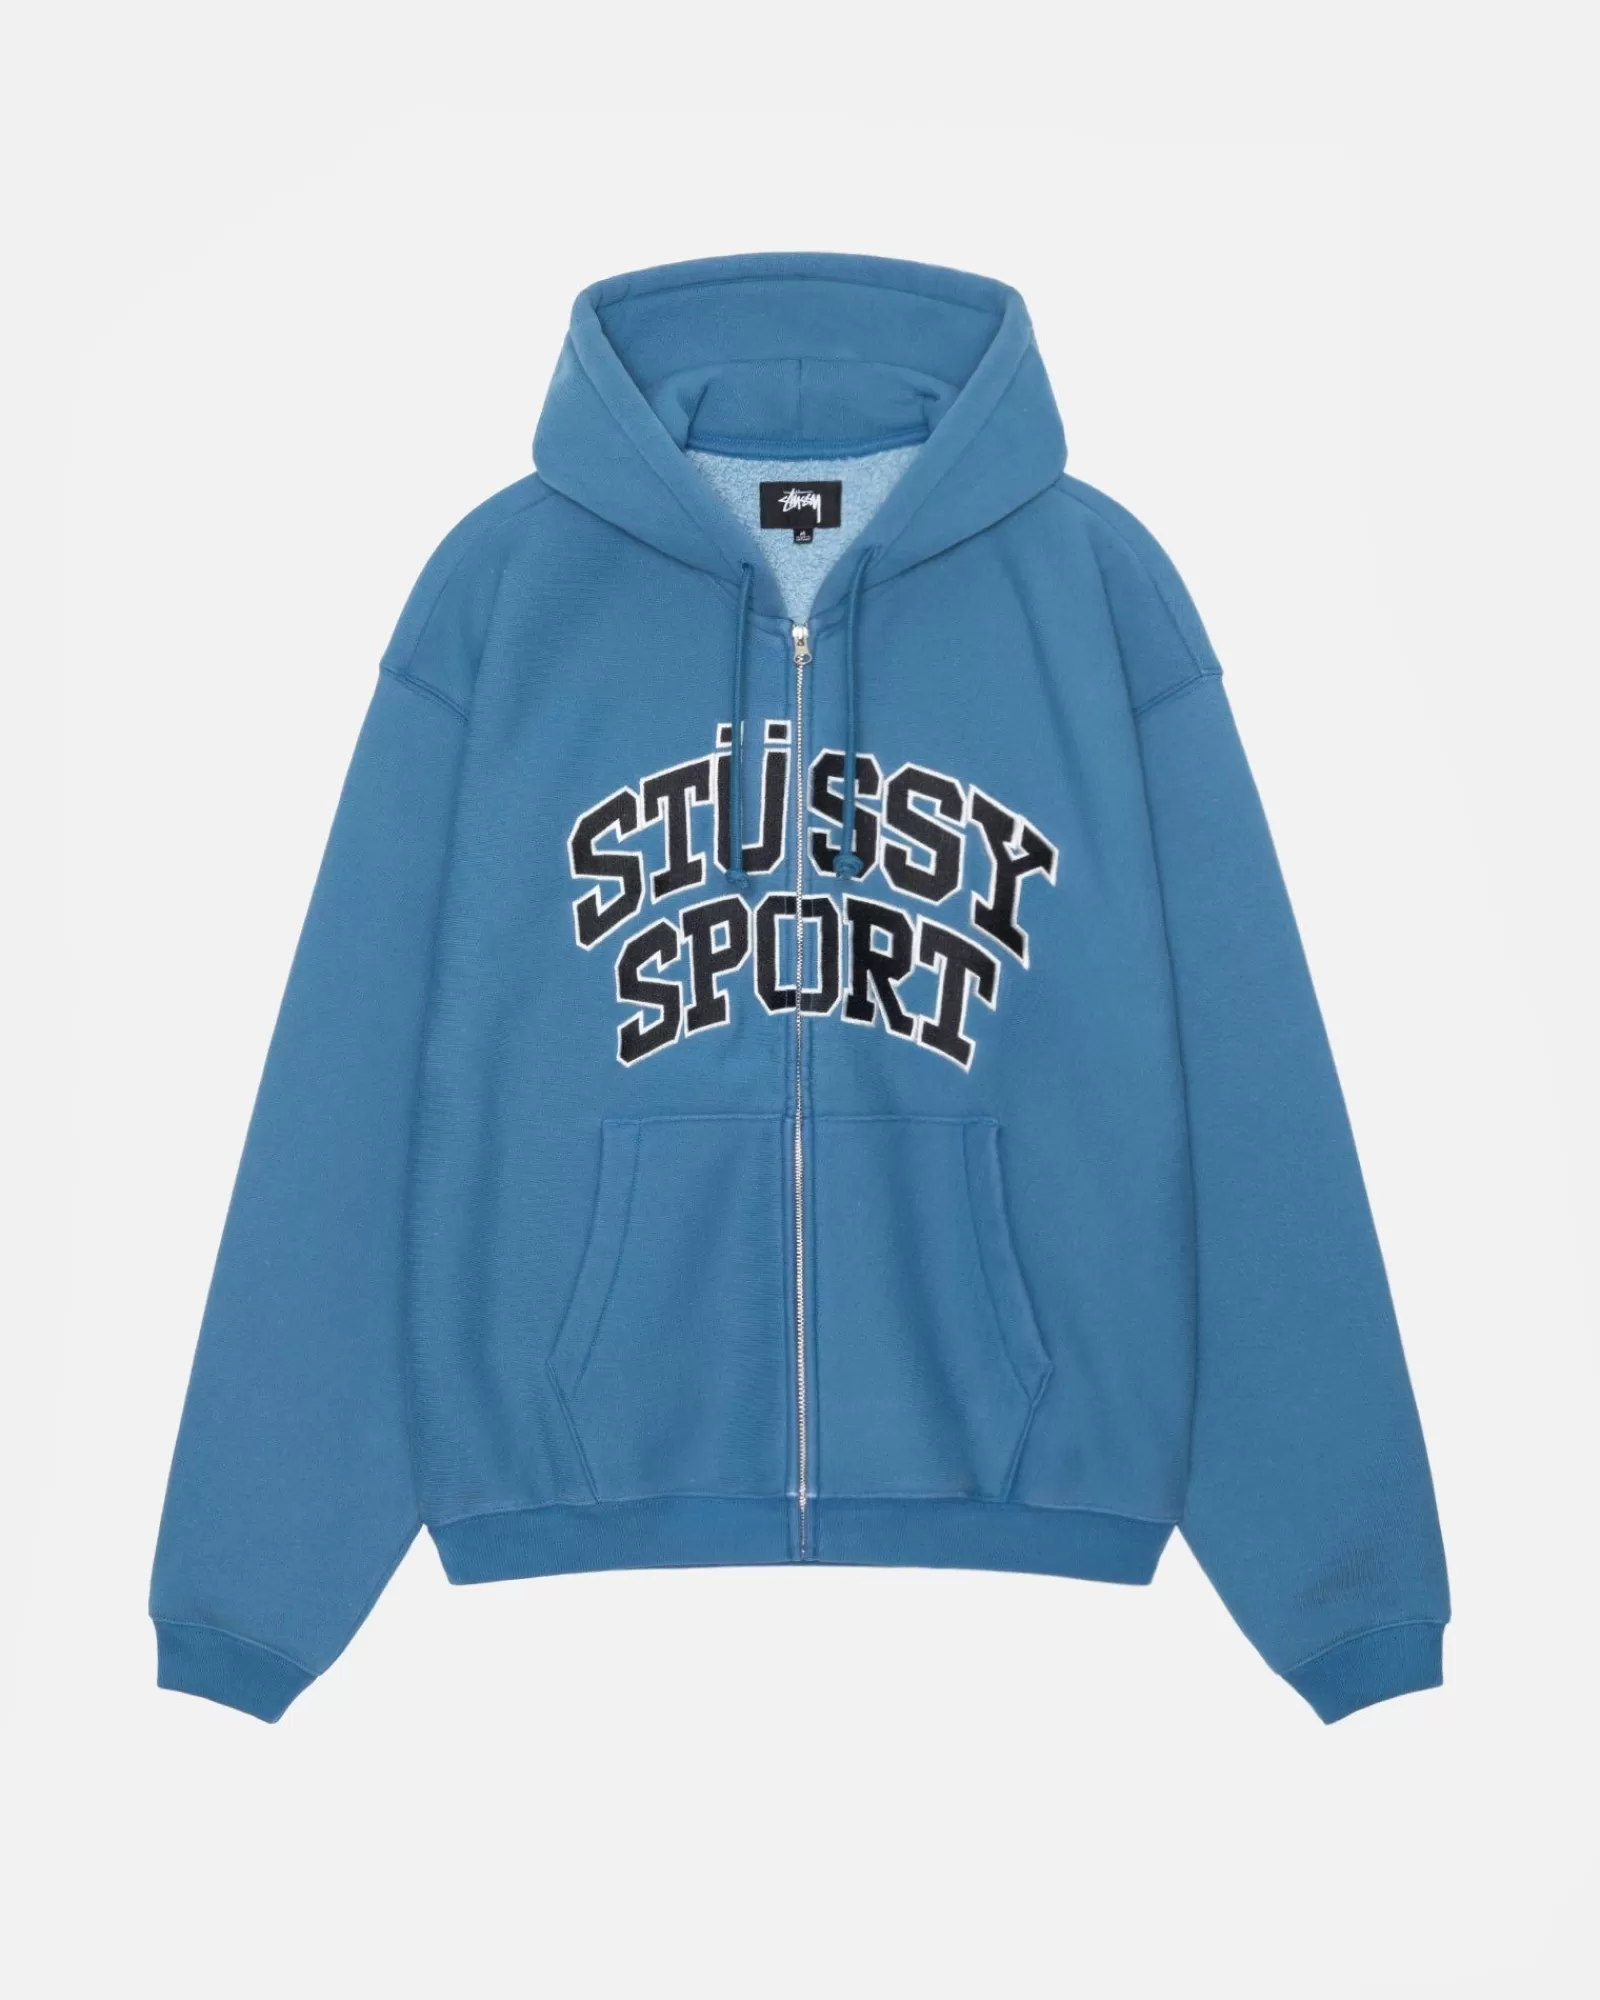 Stüssy Stussy Sport Zip Hoodie Hot